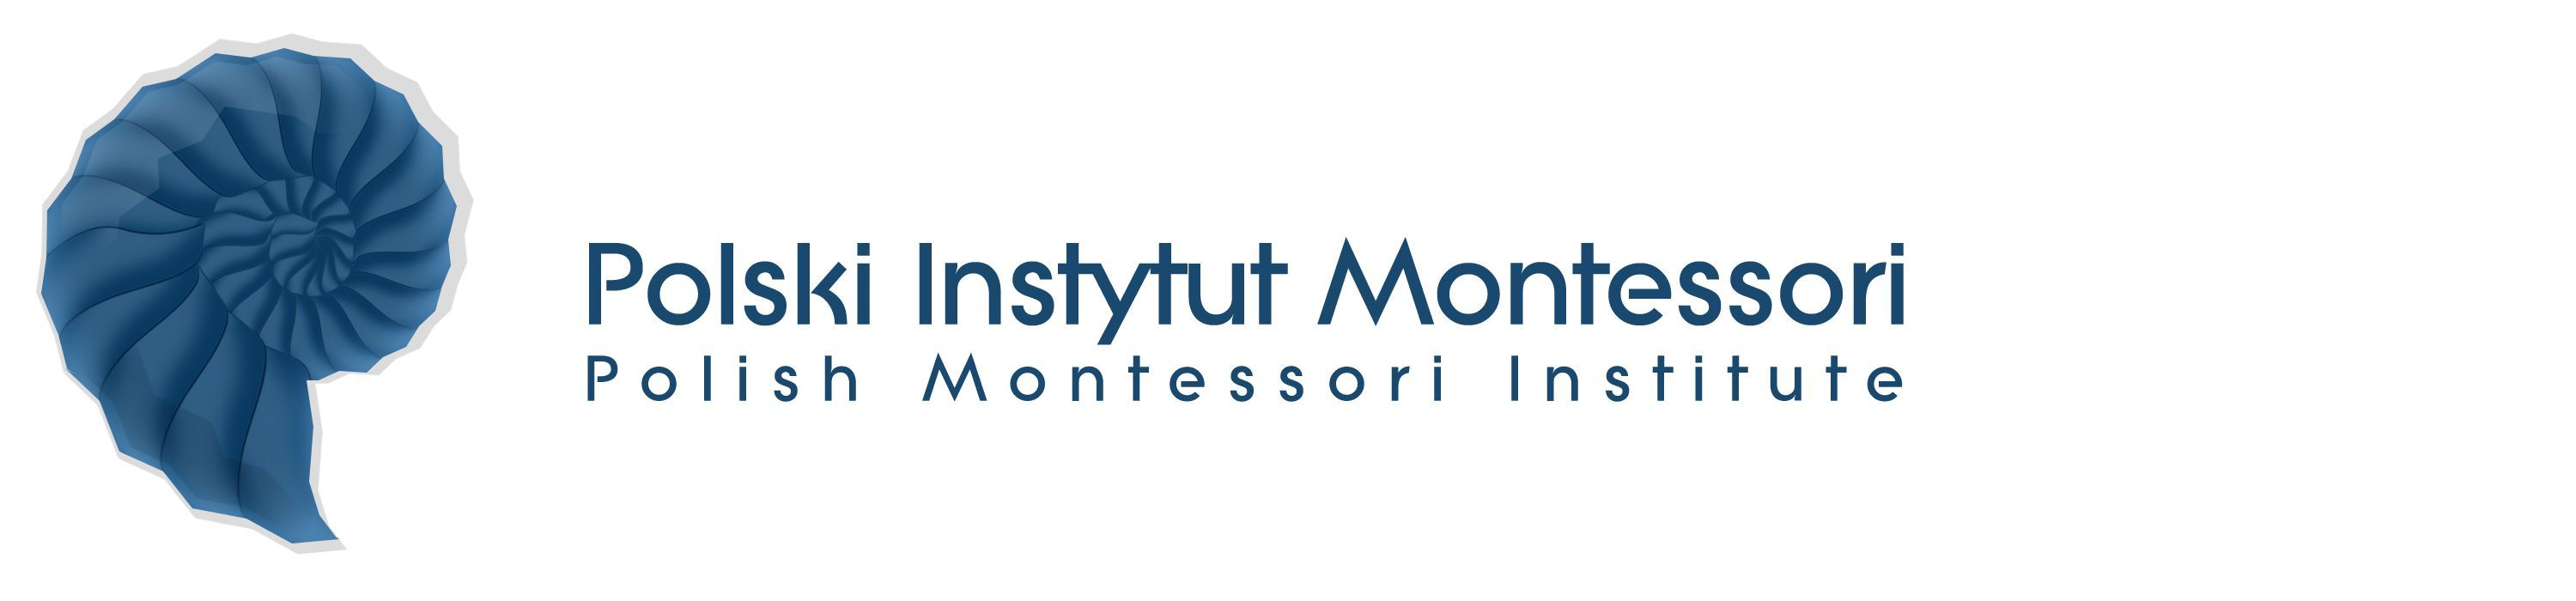 montessori_logo1.jpg